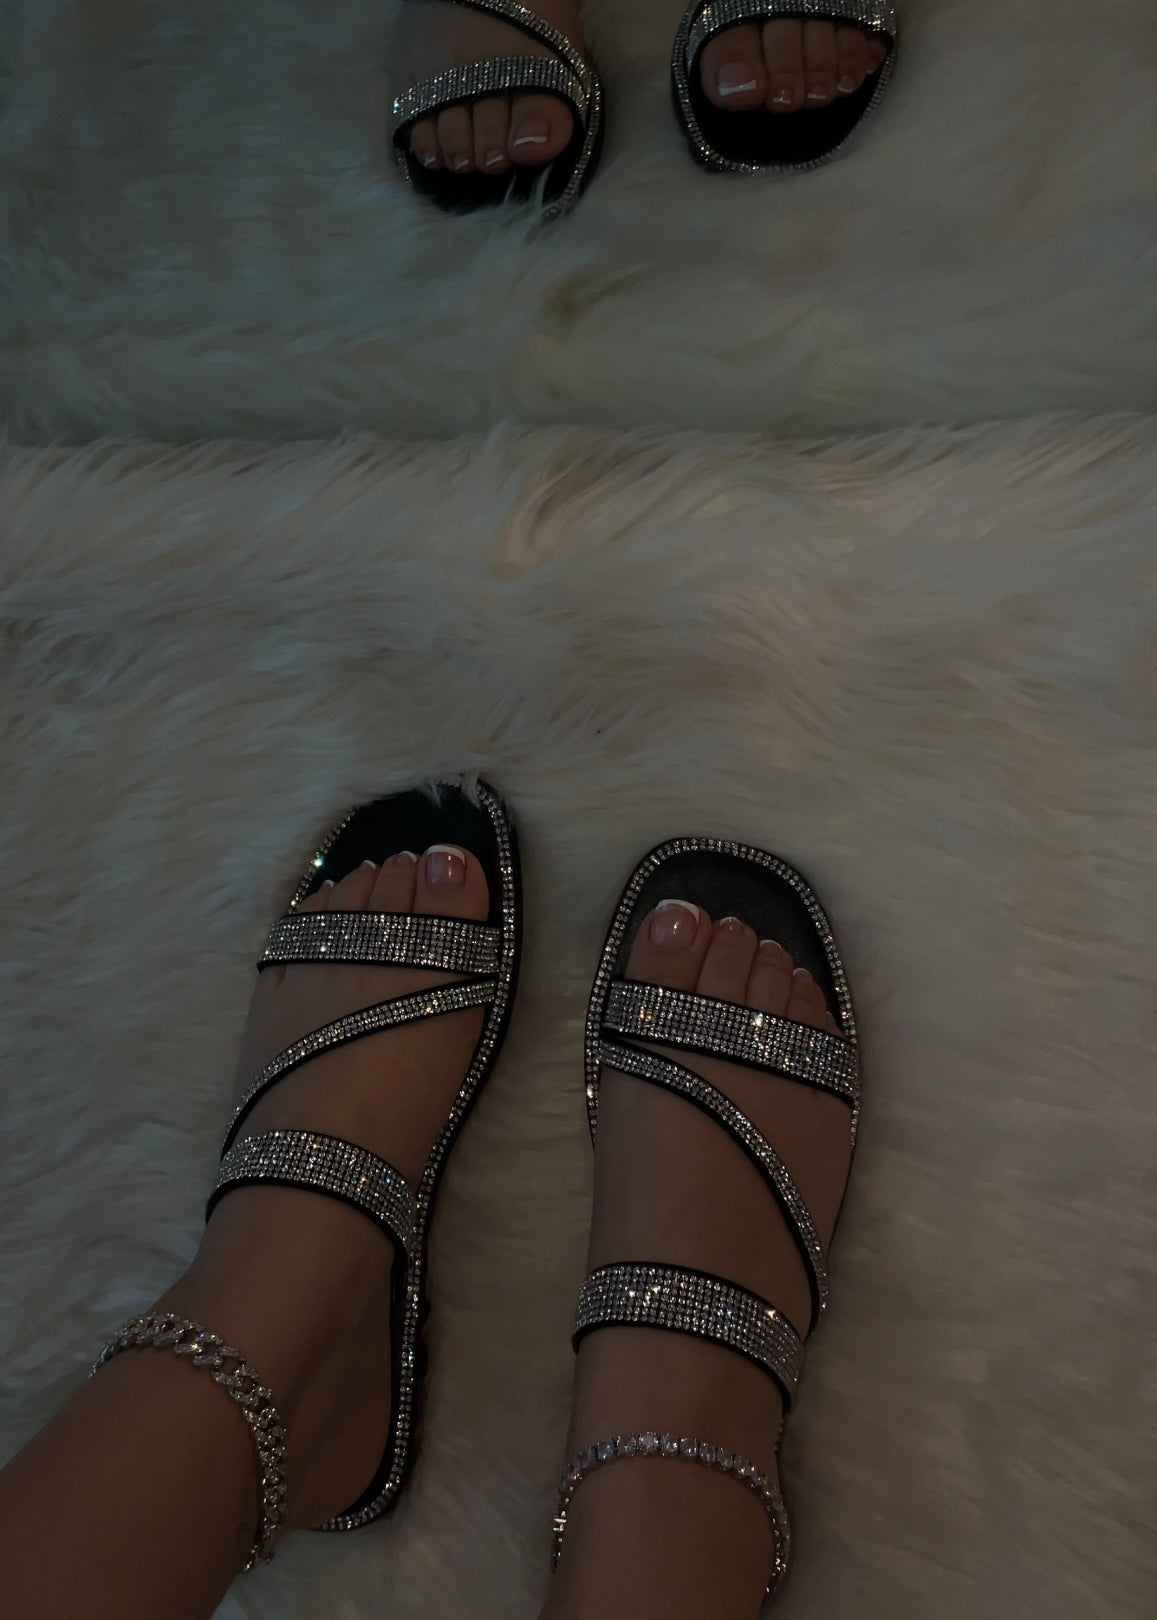 The New Sandals Women Pearl Diamond Flat Sandals Women Peep Toe Heel Ankle  Sandalia Flat Sandals Female Casual Beach Shoes Princess Shoes,Black,40 :  Amazon.co.uk: Fashion